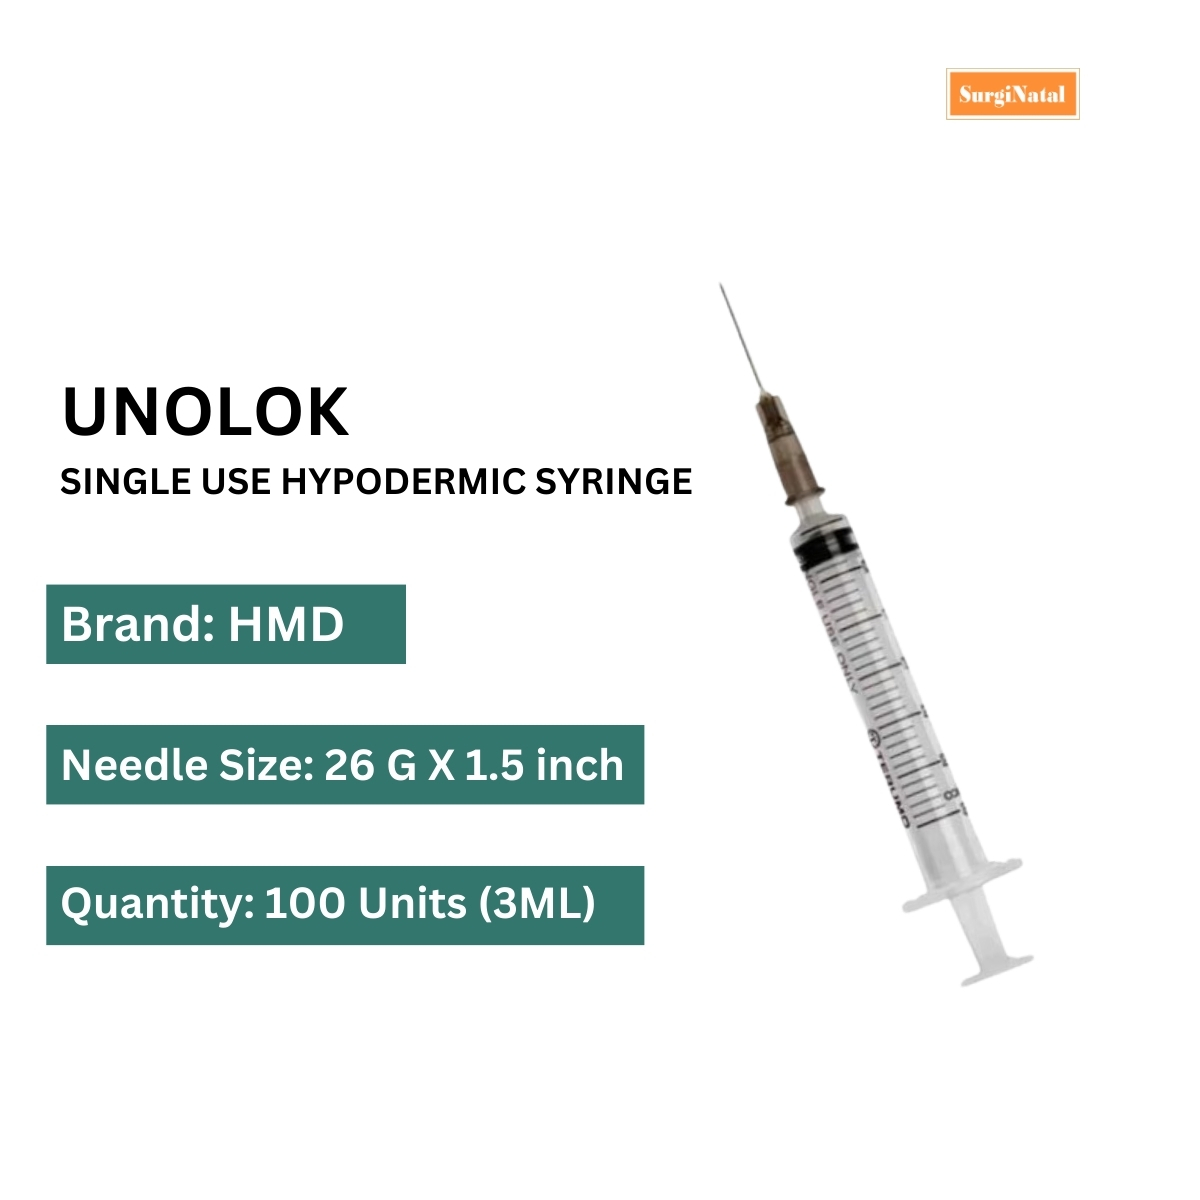 unolok syringe 3ml 26g*1.5 inch - 100 units pack